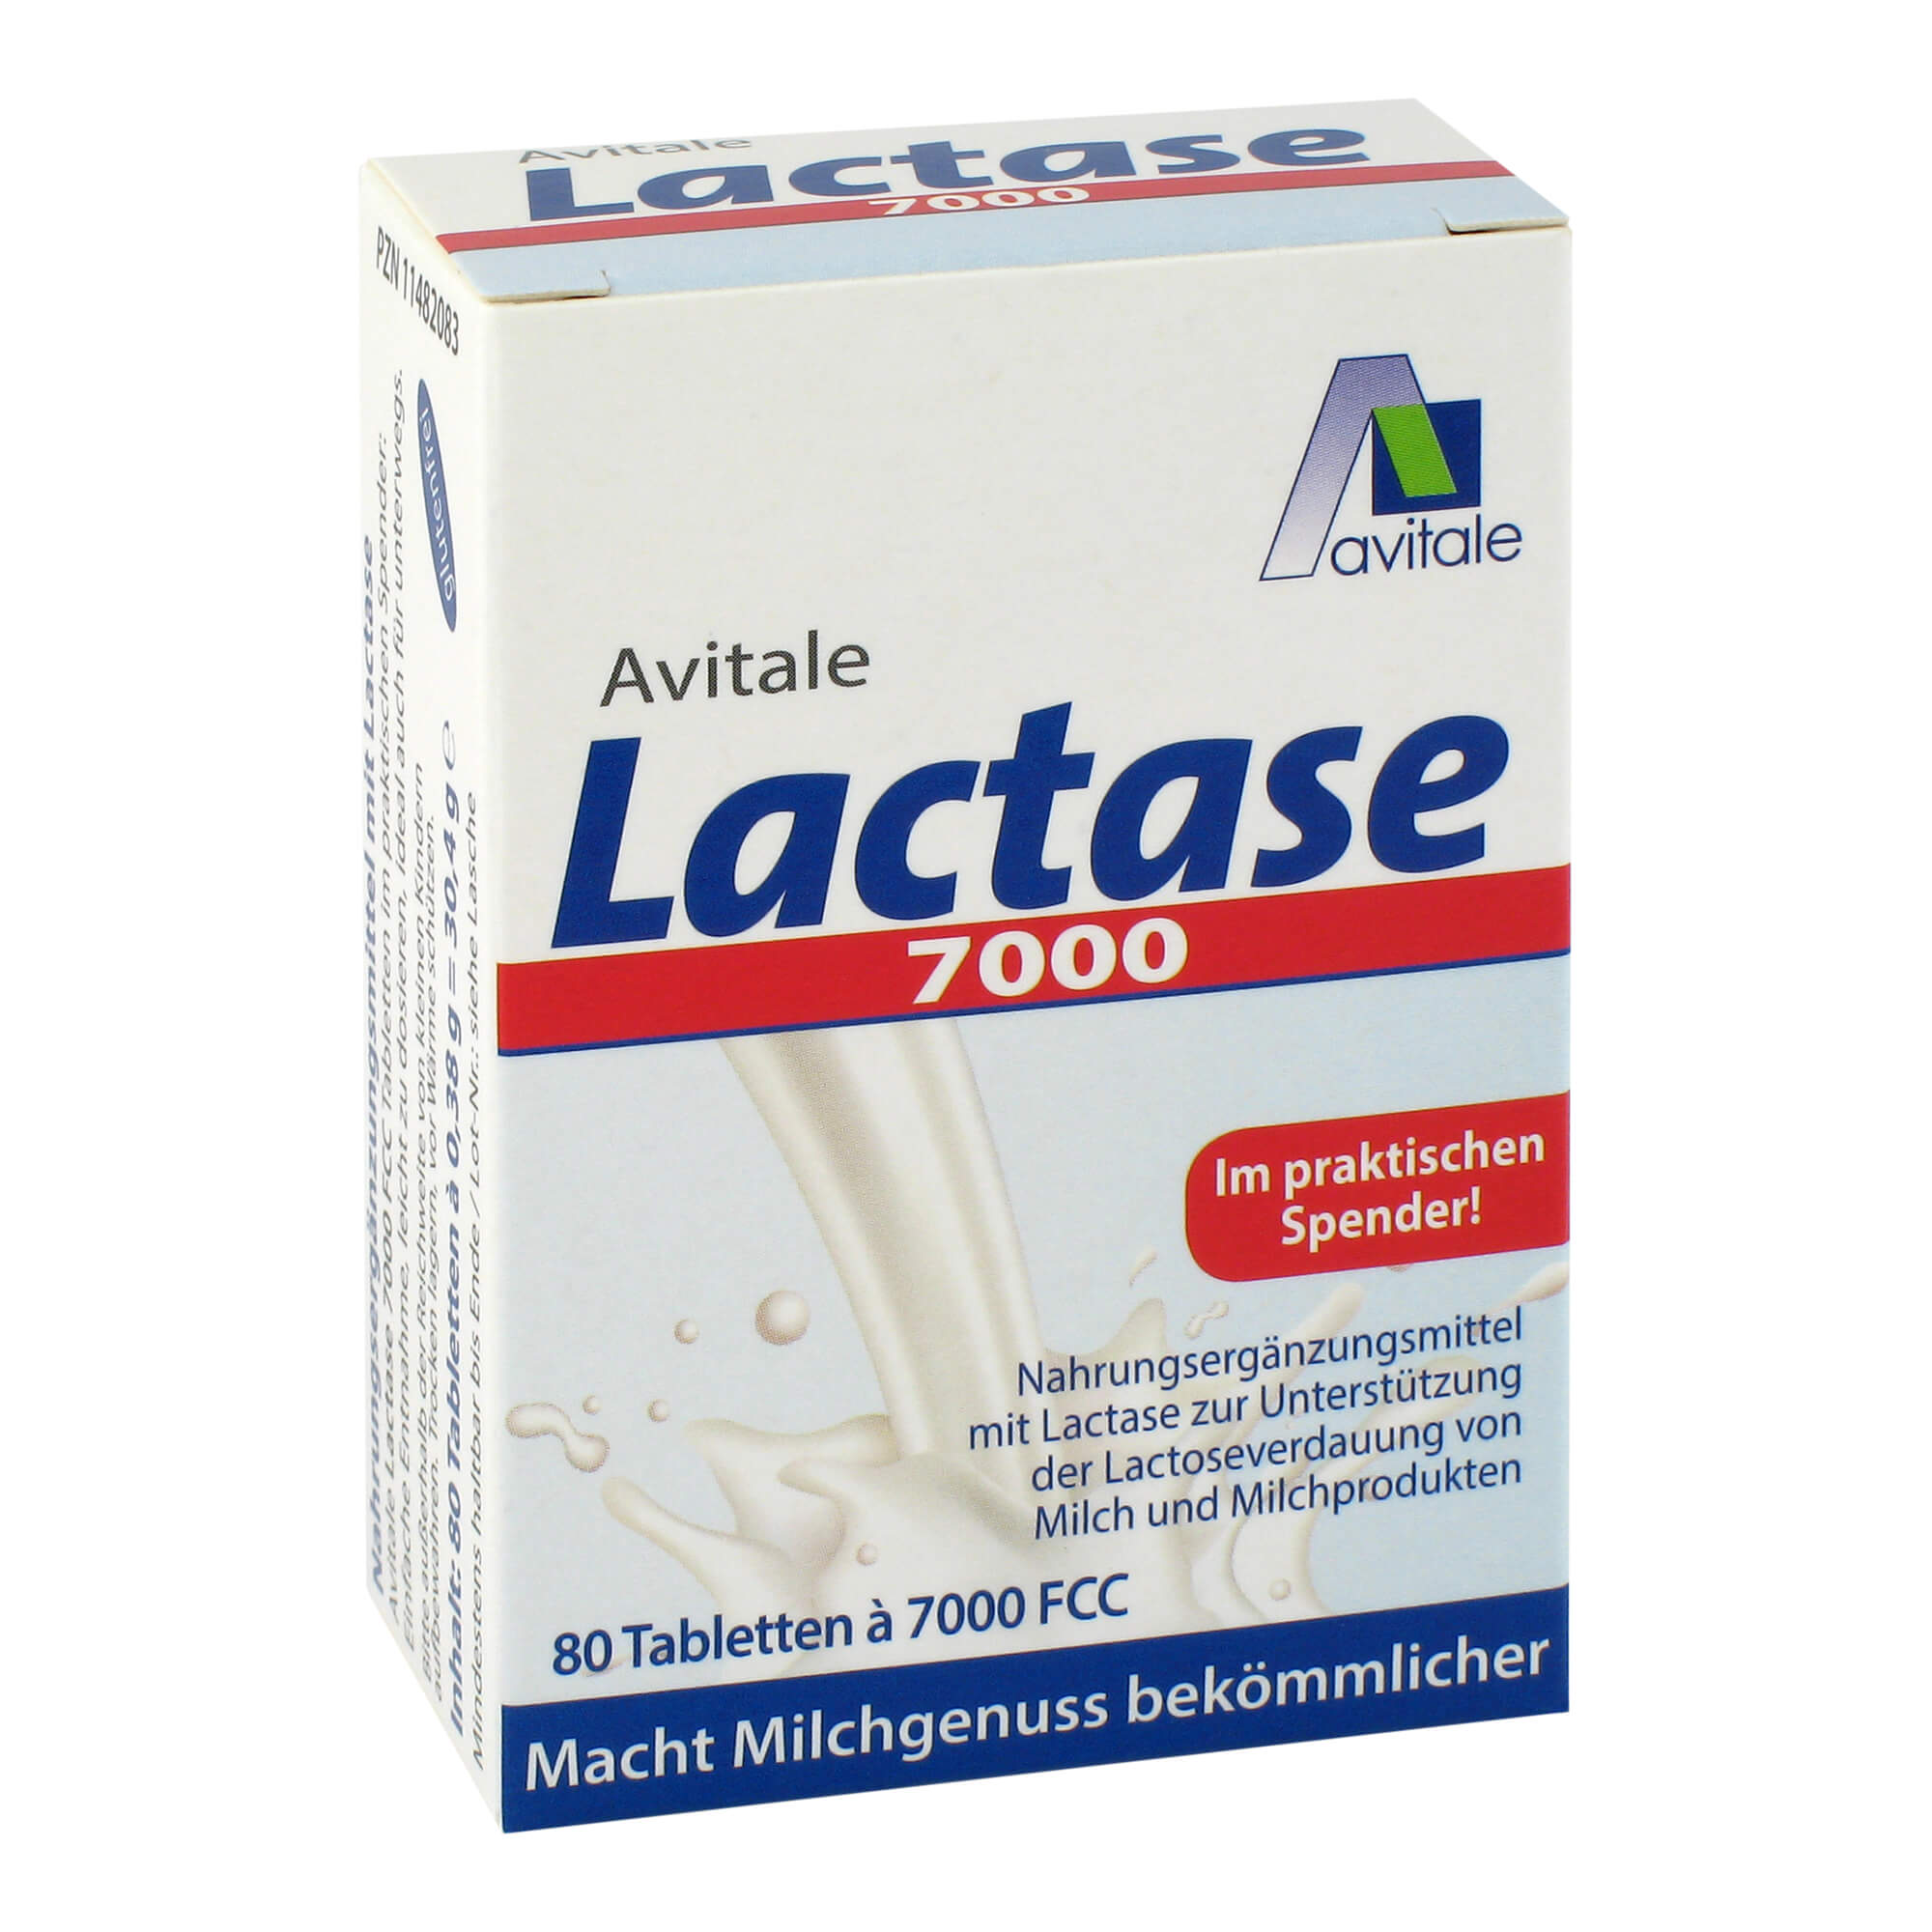 Nahrungsergänzungsmittel mit Lactase bei Lactose-Intoleranz.